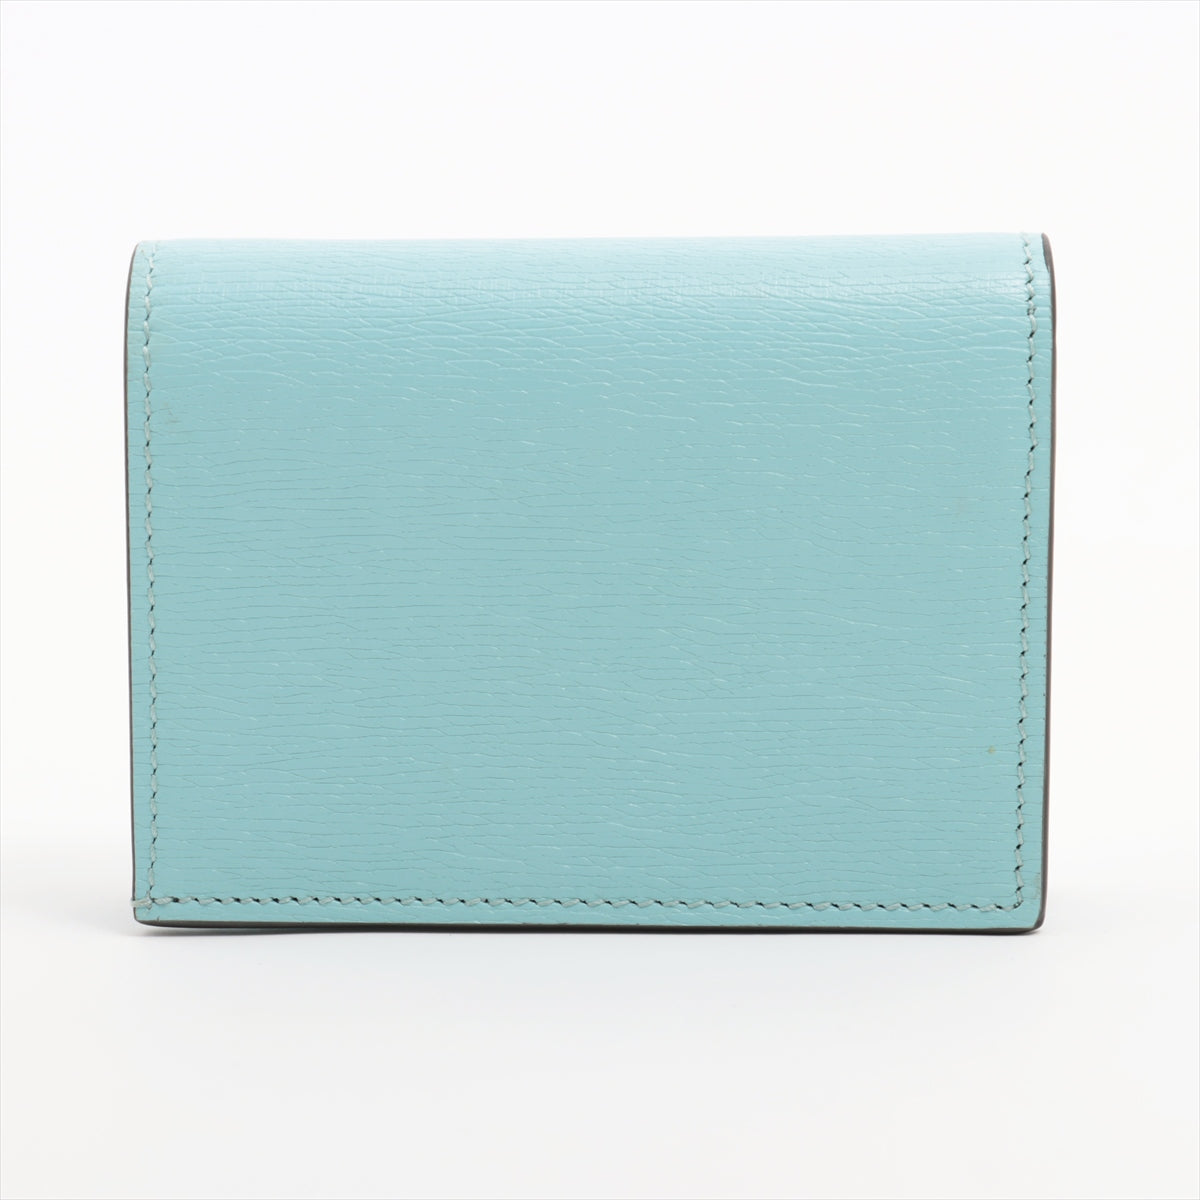 Gucci Bananya 701009 Leather Compact Wallet Blue